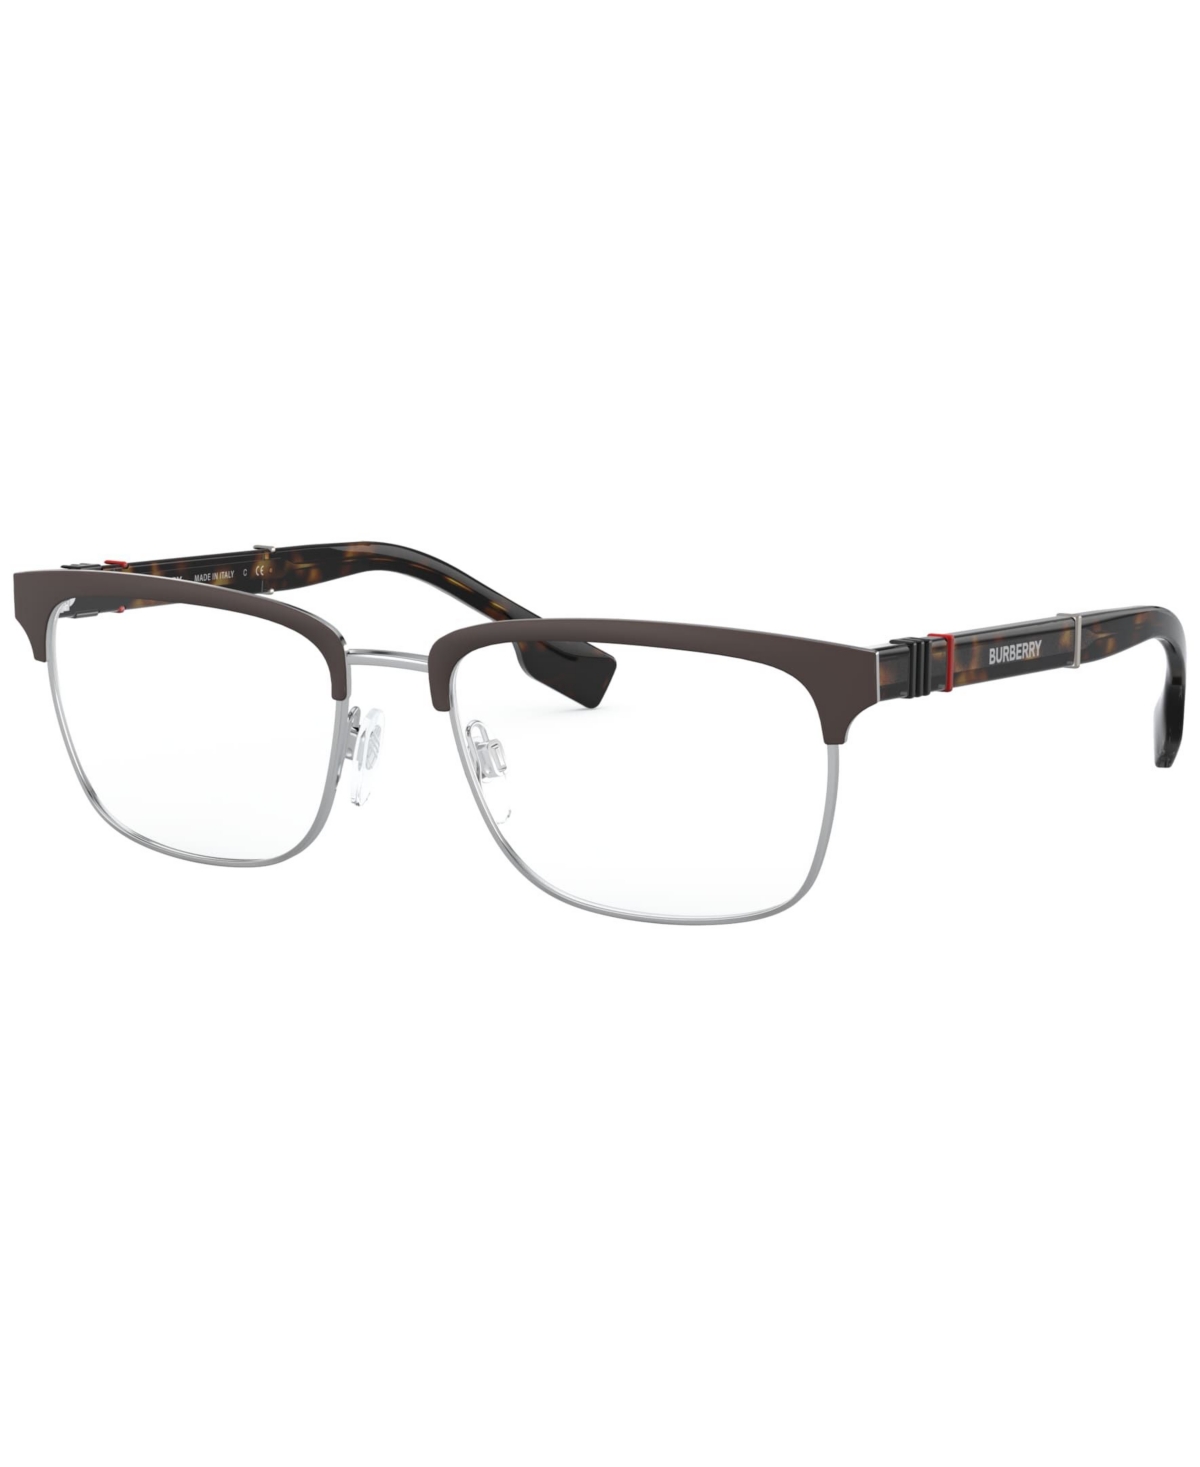 BE1348 Men's Rectangle Eyeglasses - Brown